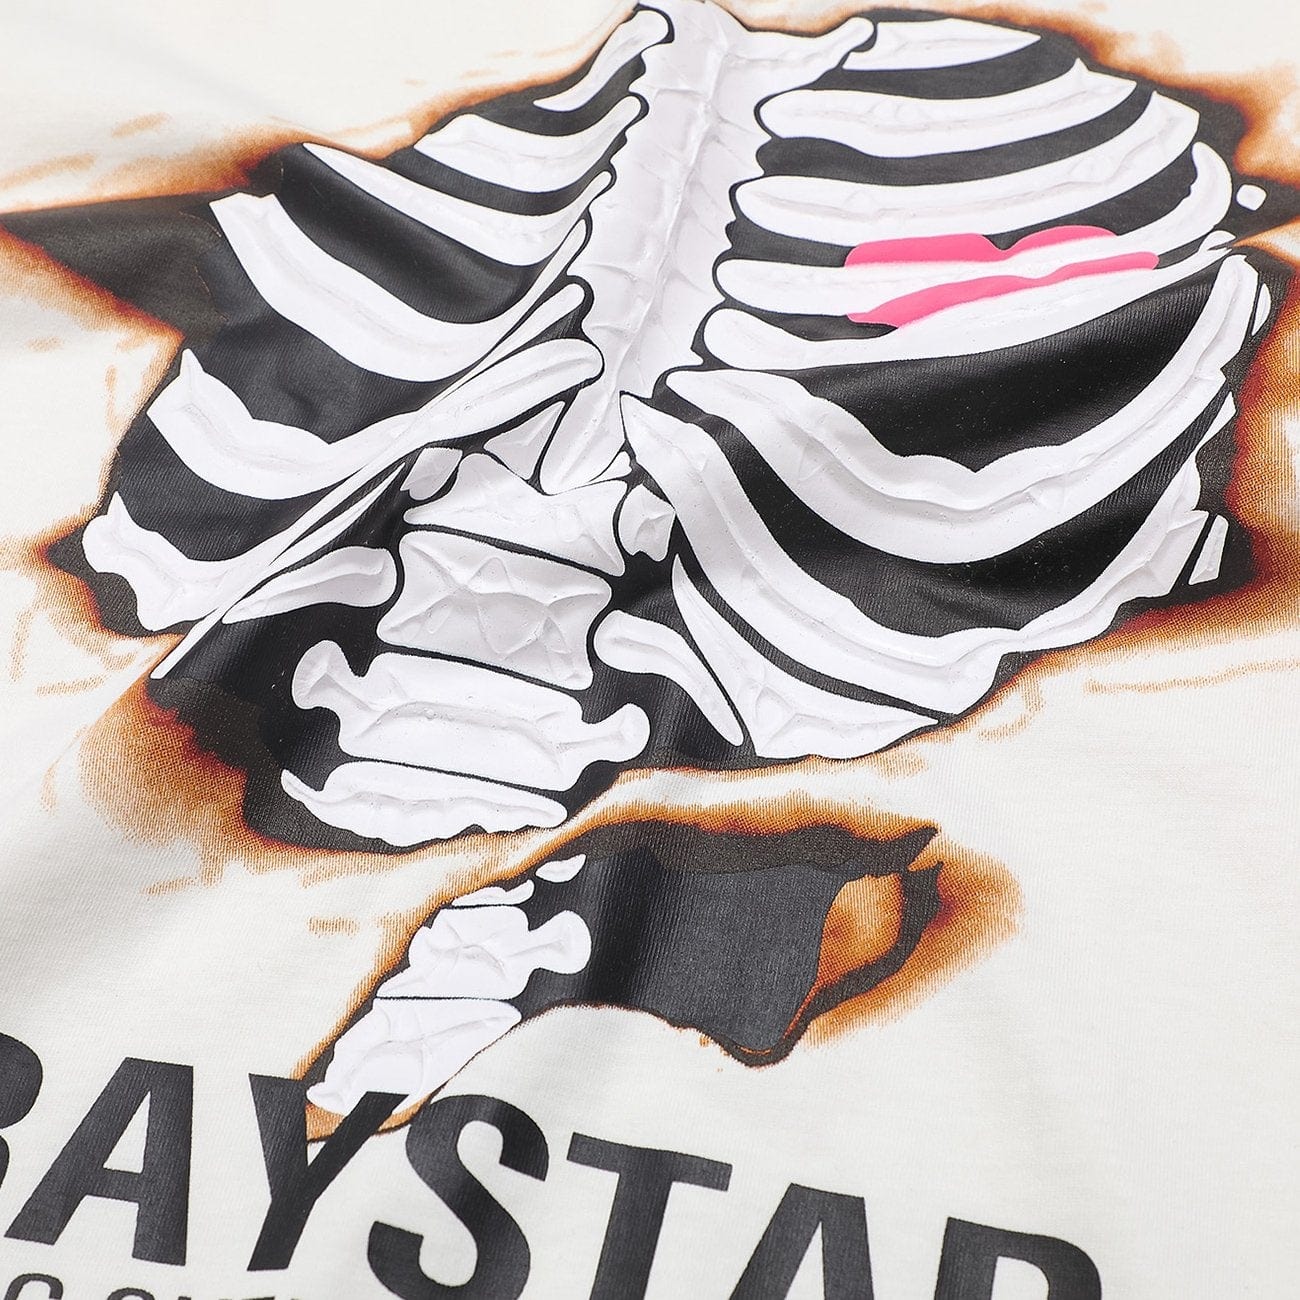 Burn The Skeleton Graphic Tee Streetwear Brand Techwear Combat Tactical YUGEN THEORY